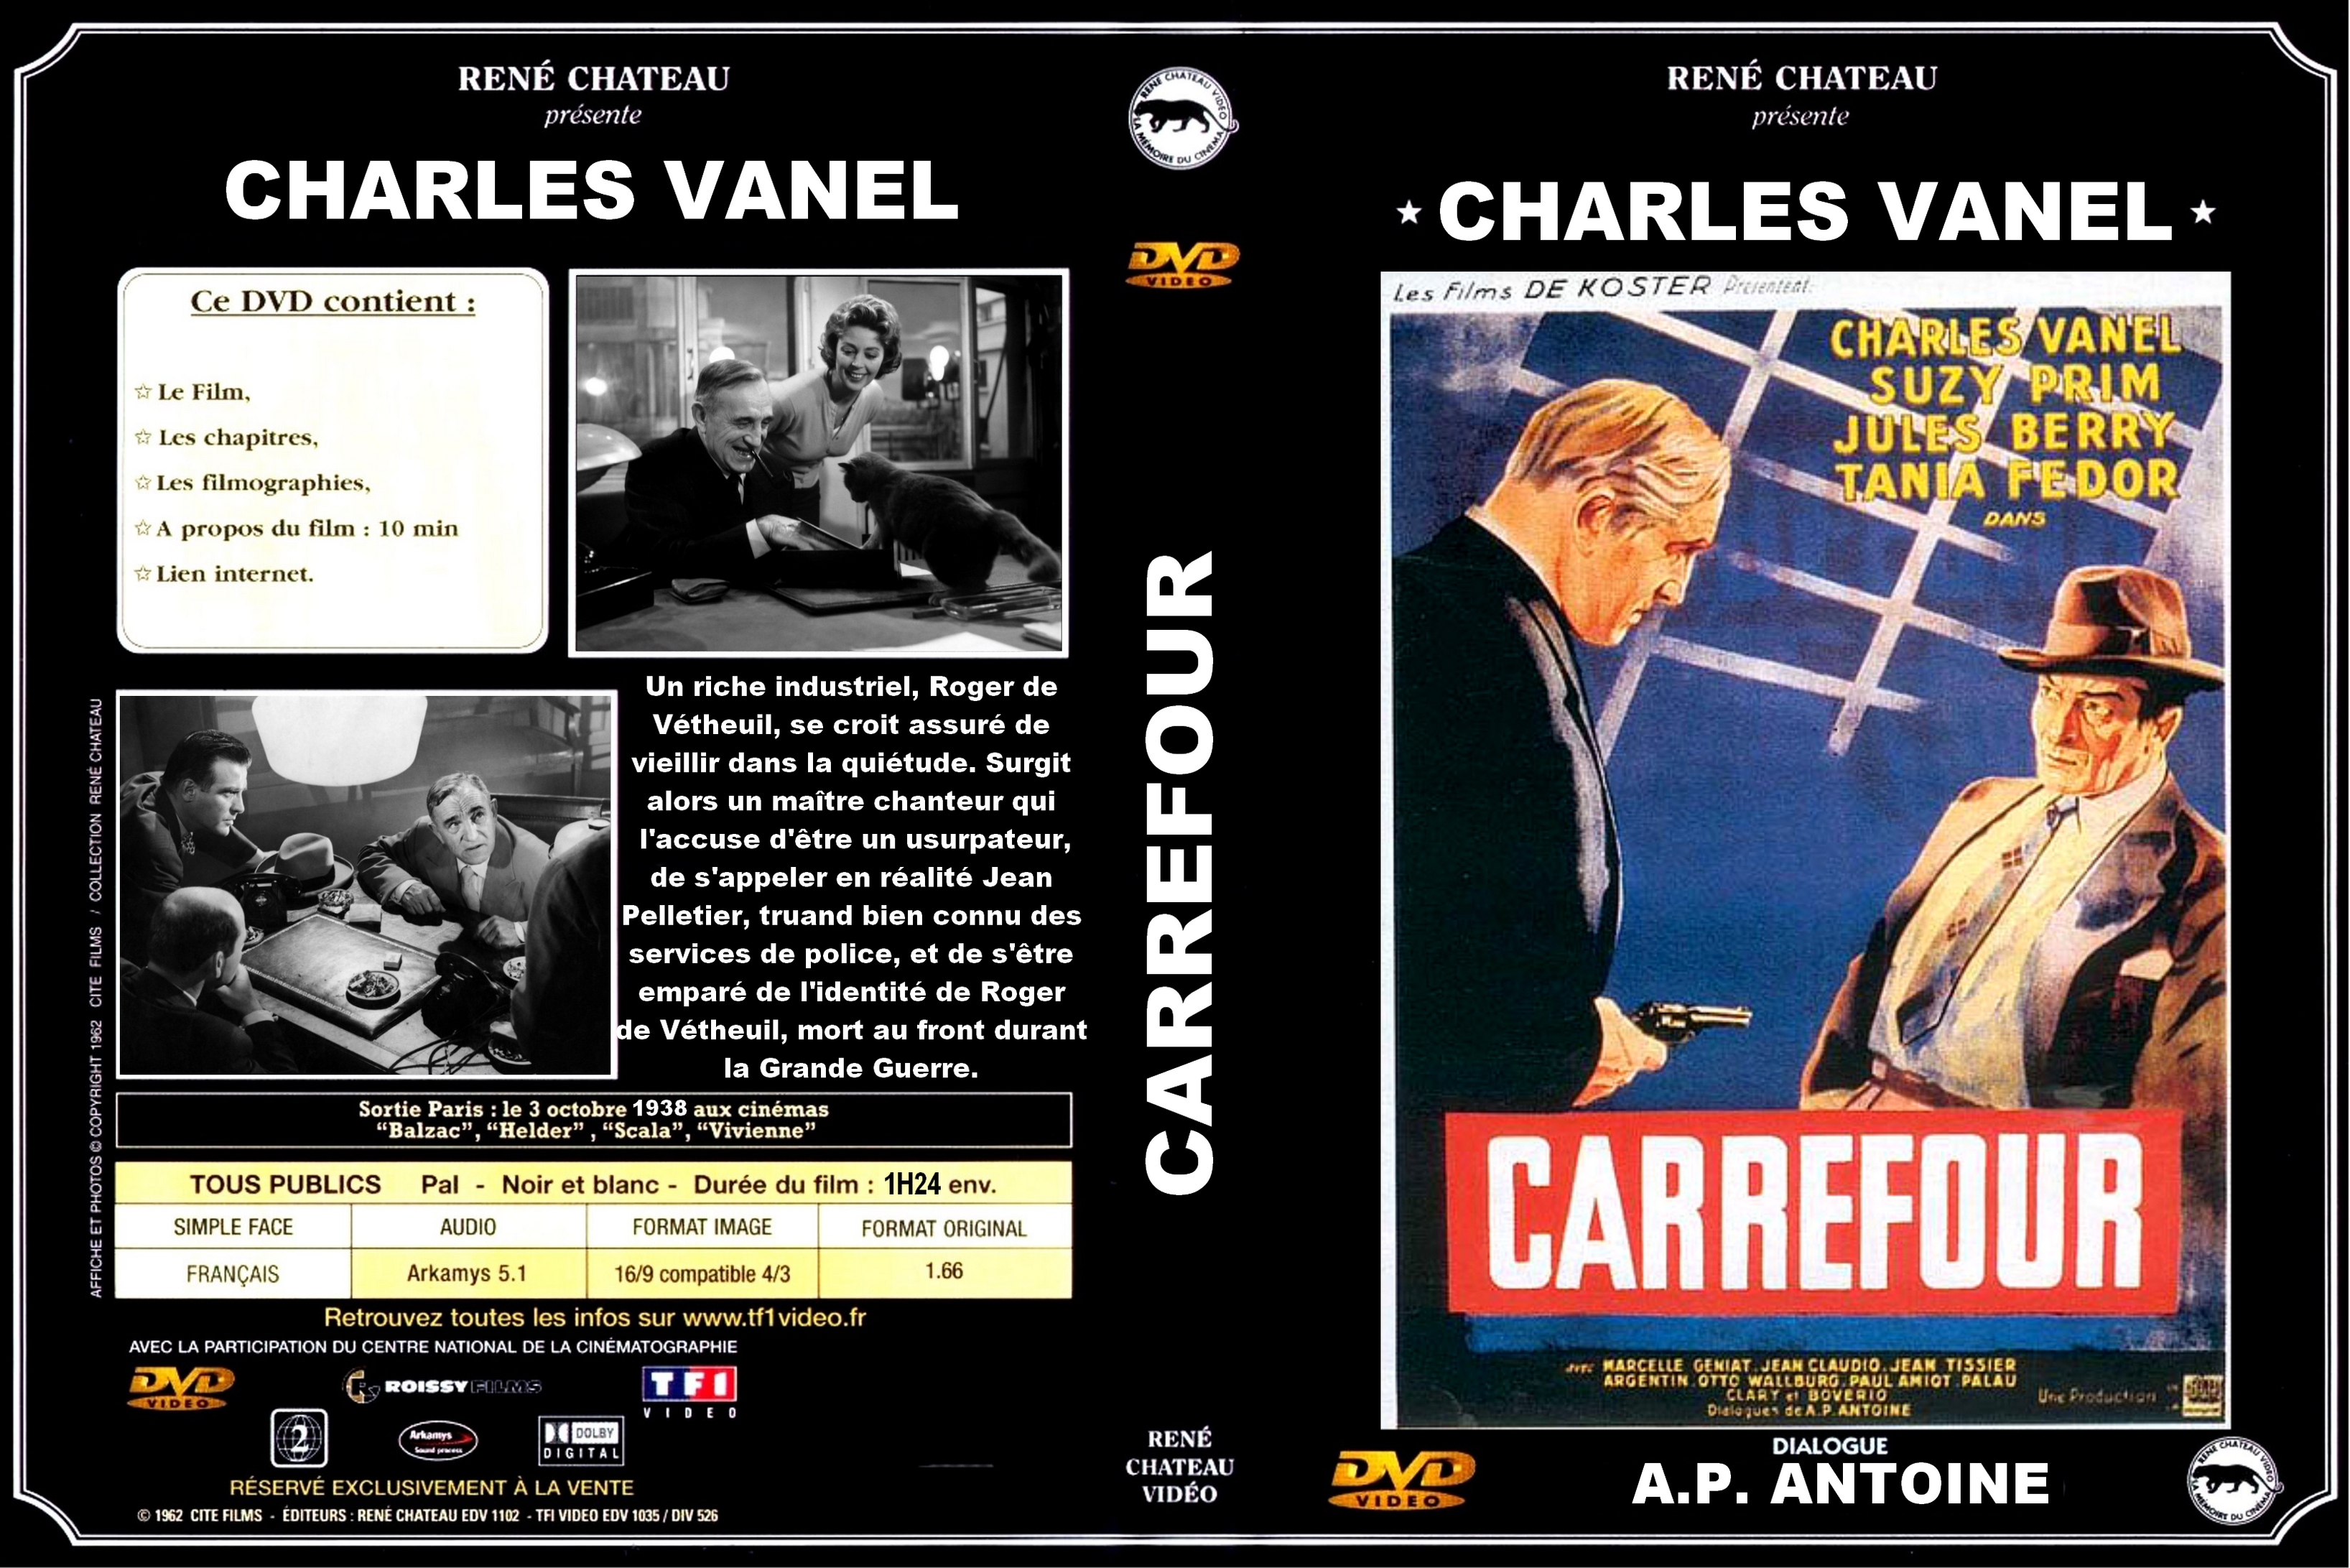 Jaquette DVD Carrefour custom